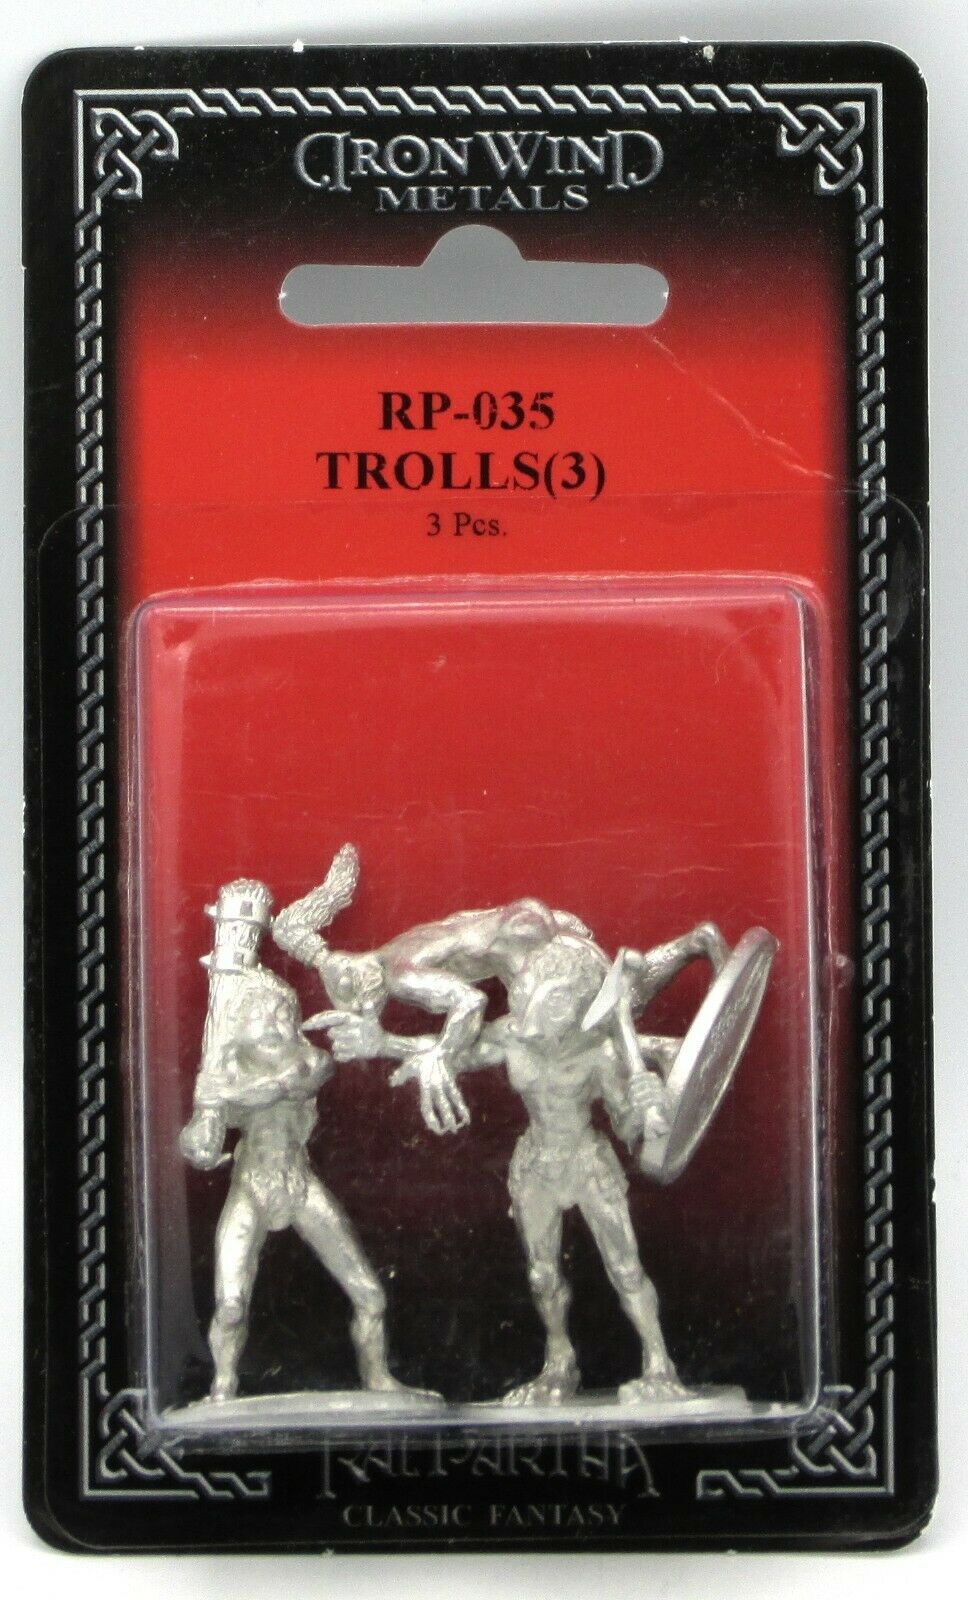 Ral Partha RP-035 Trolls [3] (Monsters) Ogres Fantasy Warriors 25mm Miniatures